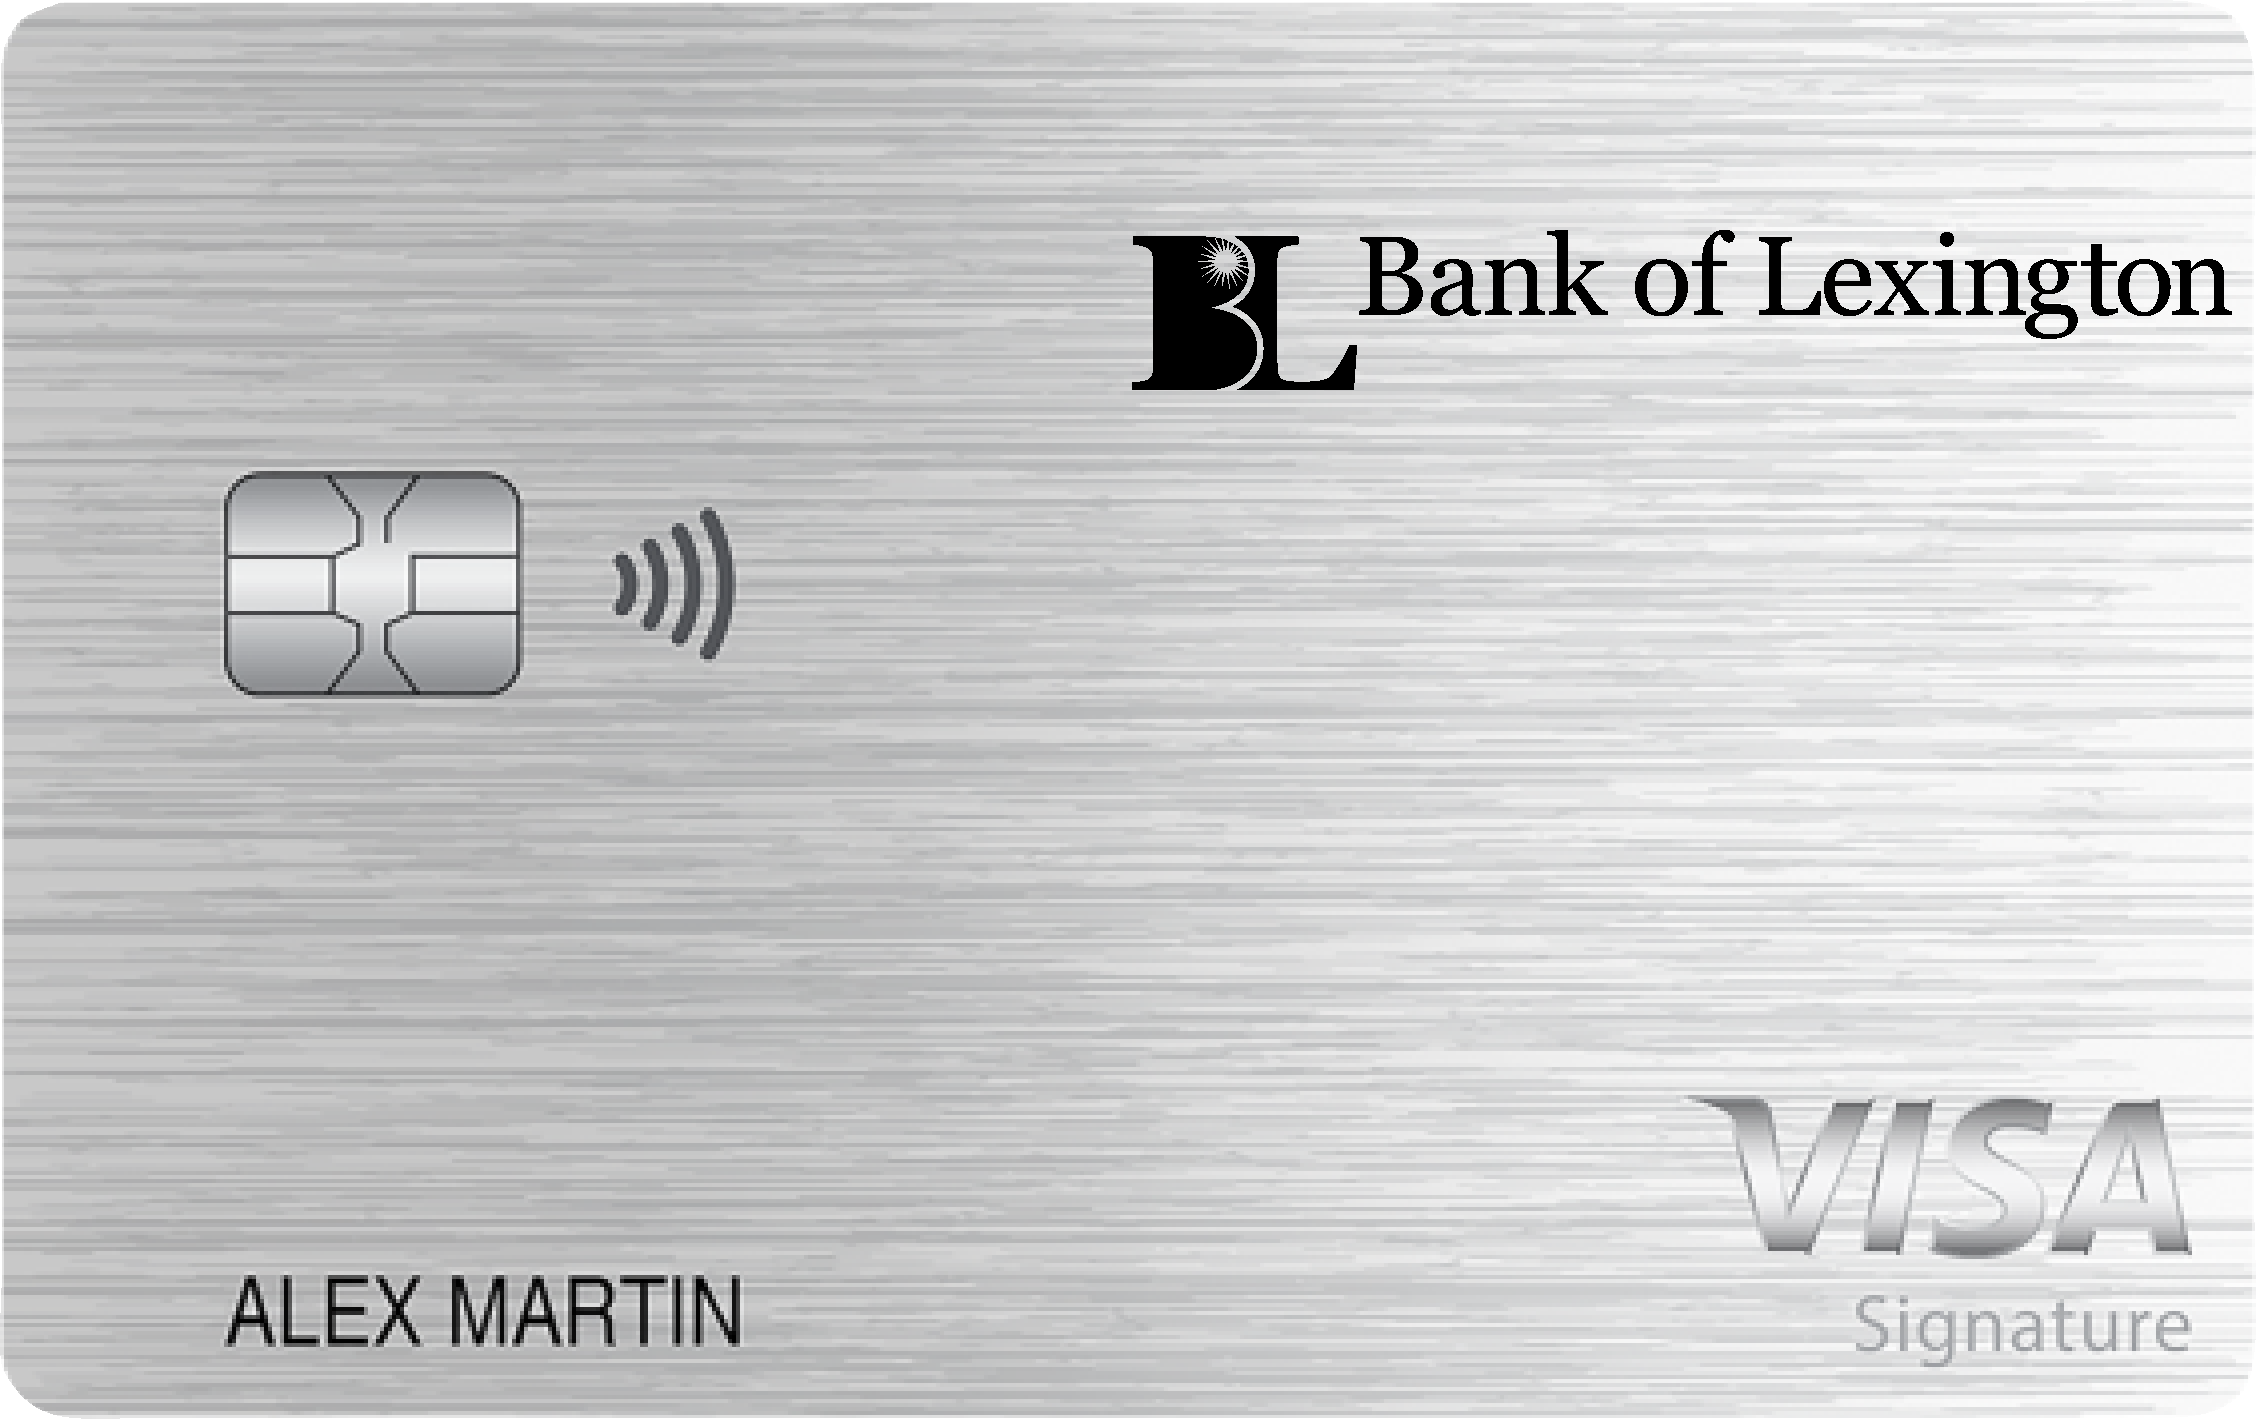 Bank of Lexington Max Cash Preferred Card